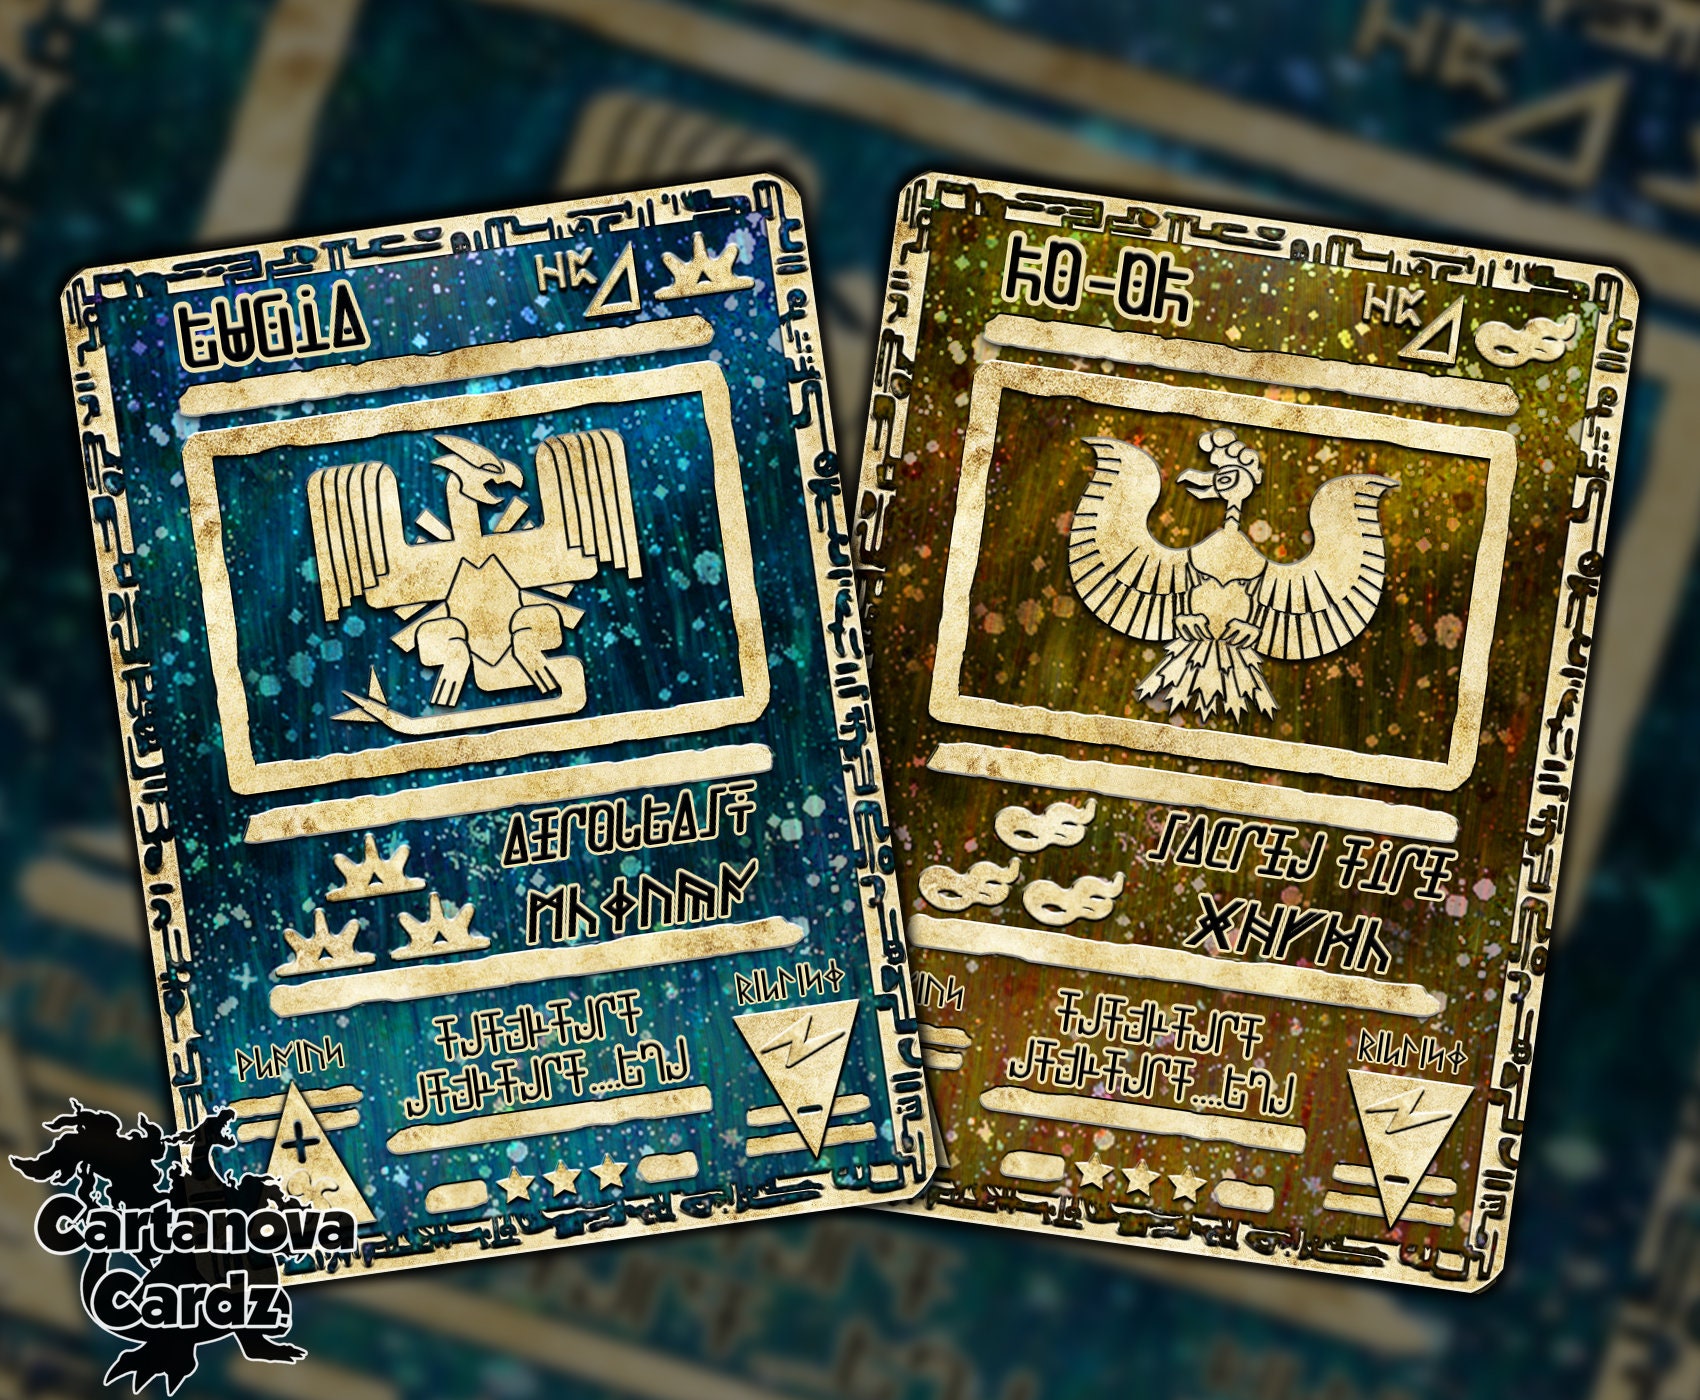 THE RAREST GOLDEN ARCEUS POKEMON CARD IS FINALLY MINE! 